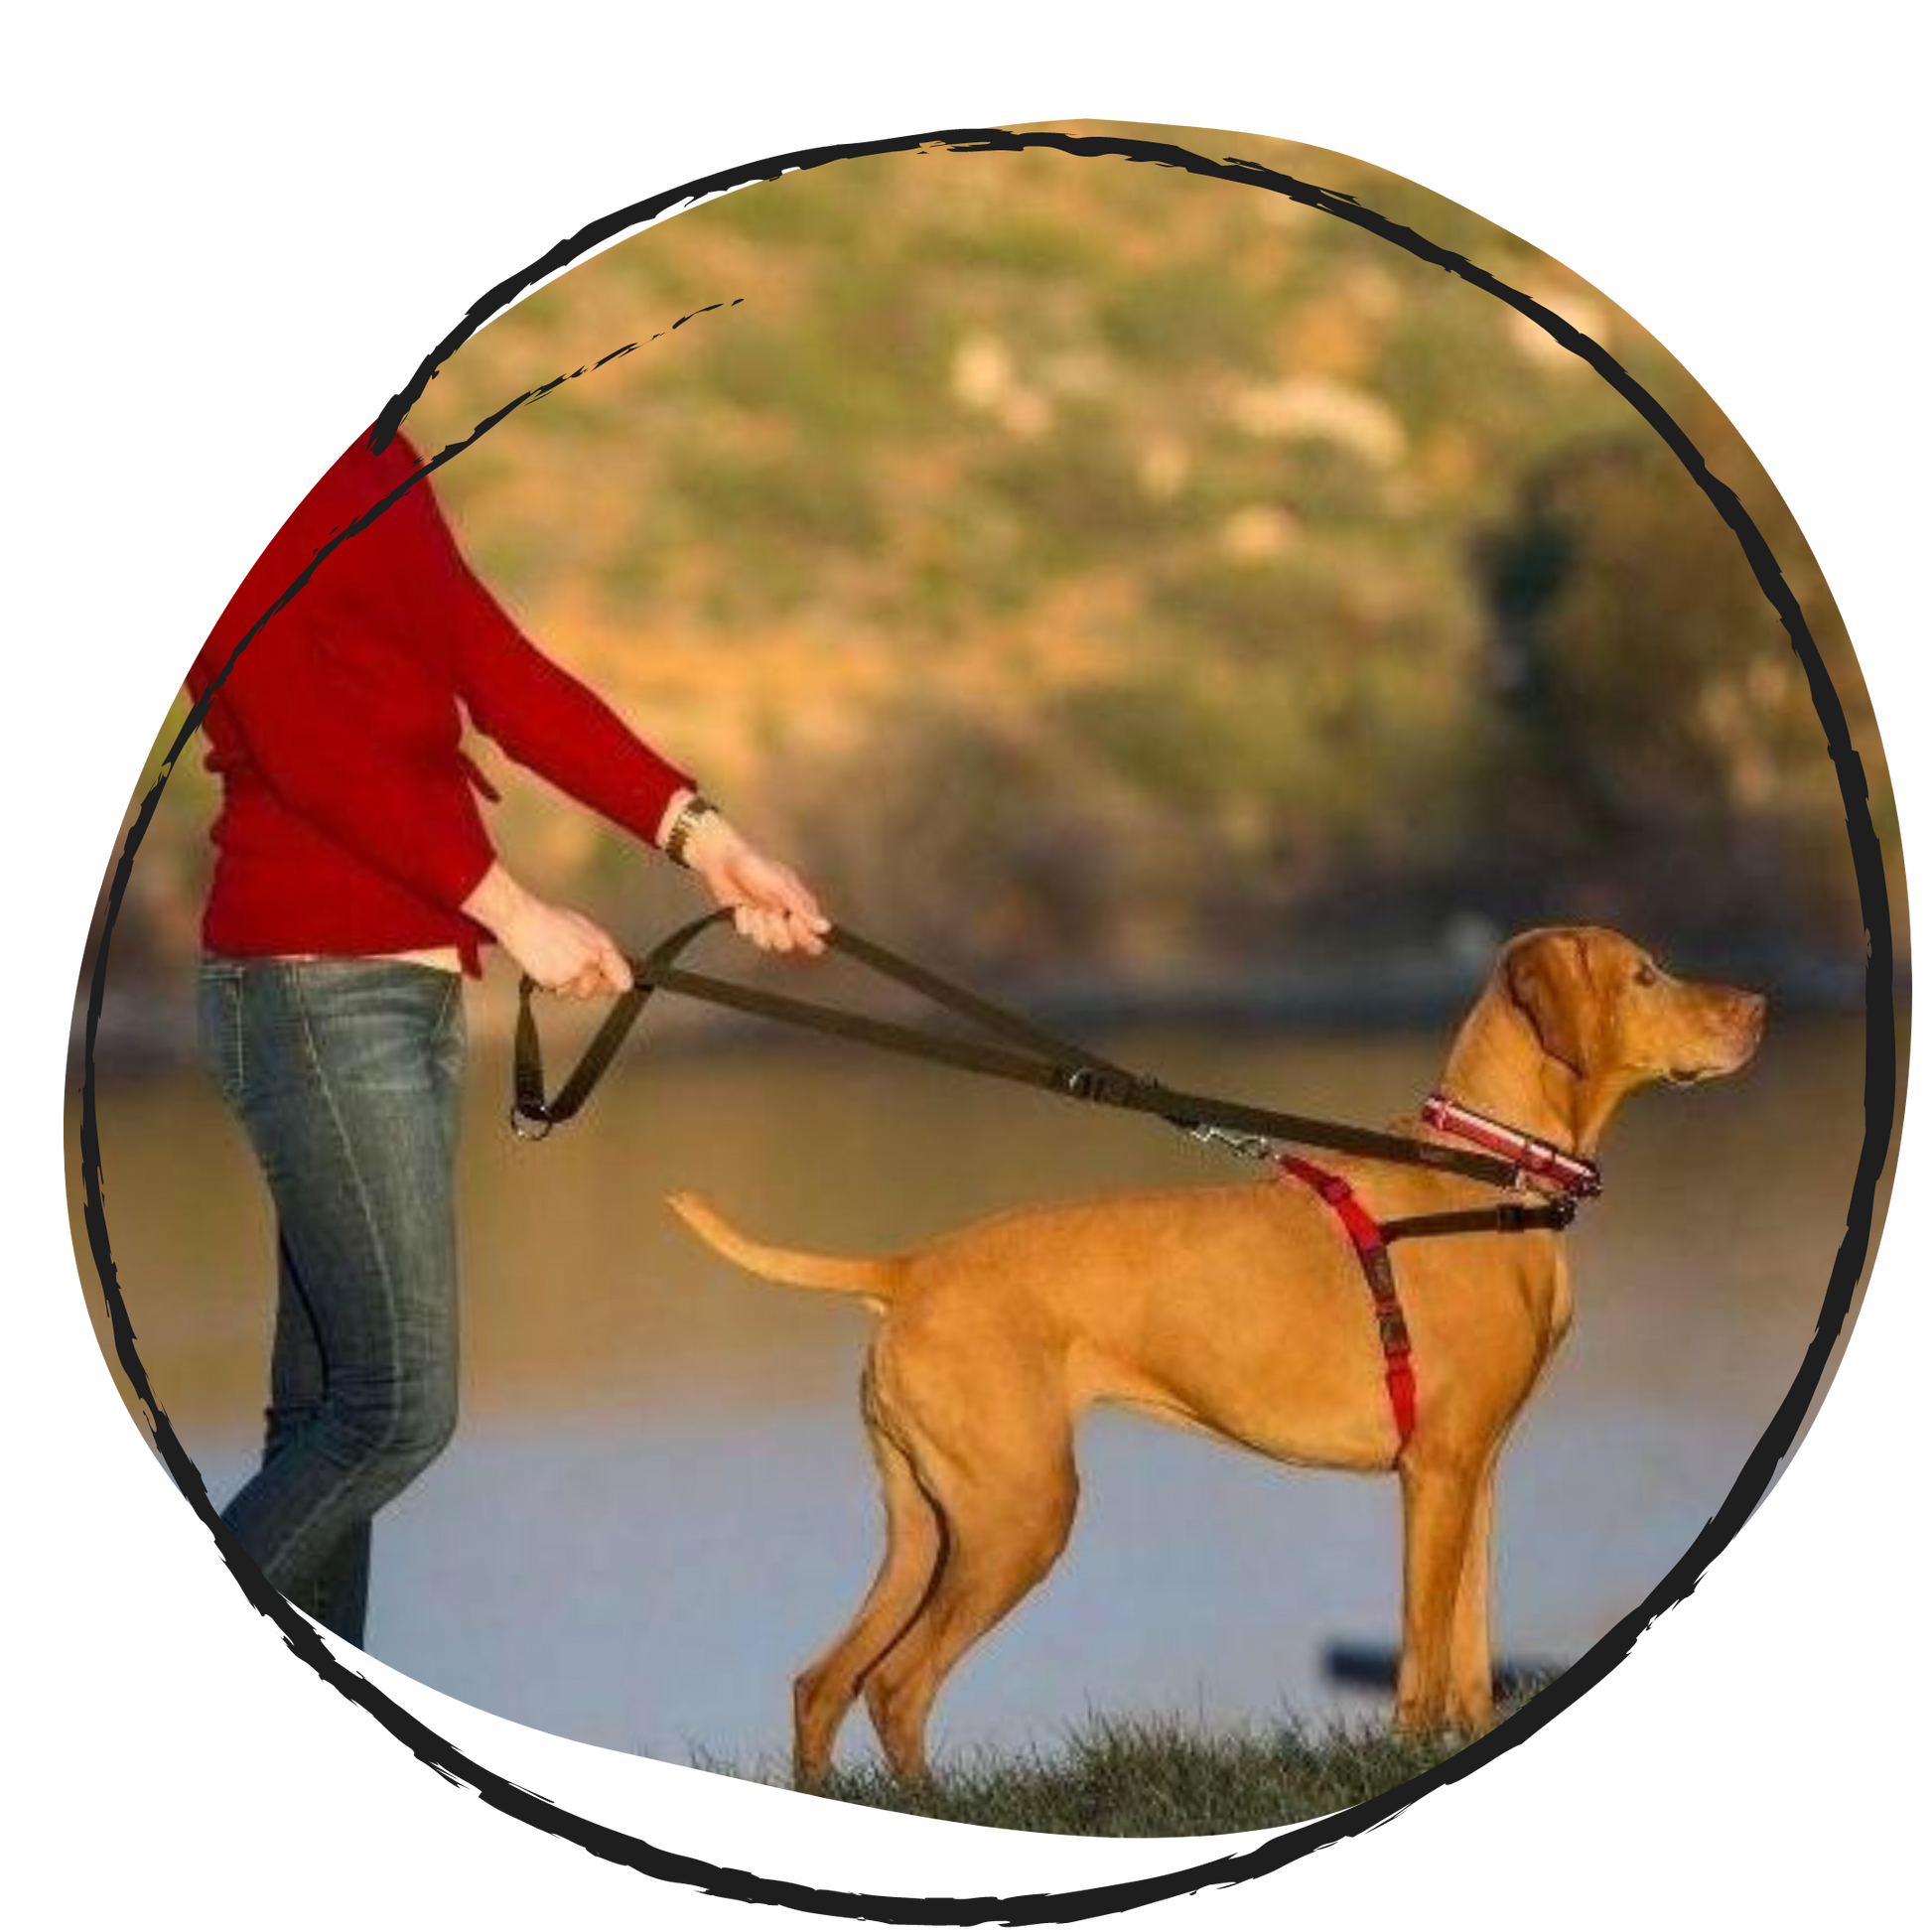 Halti front control dog training harness on a dog